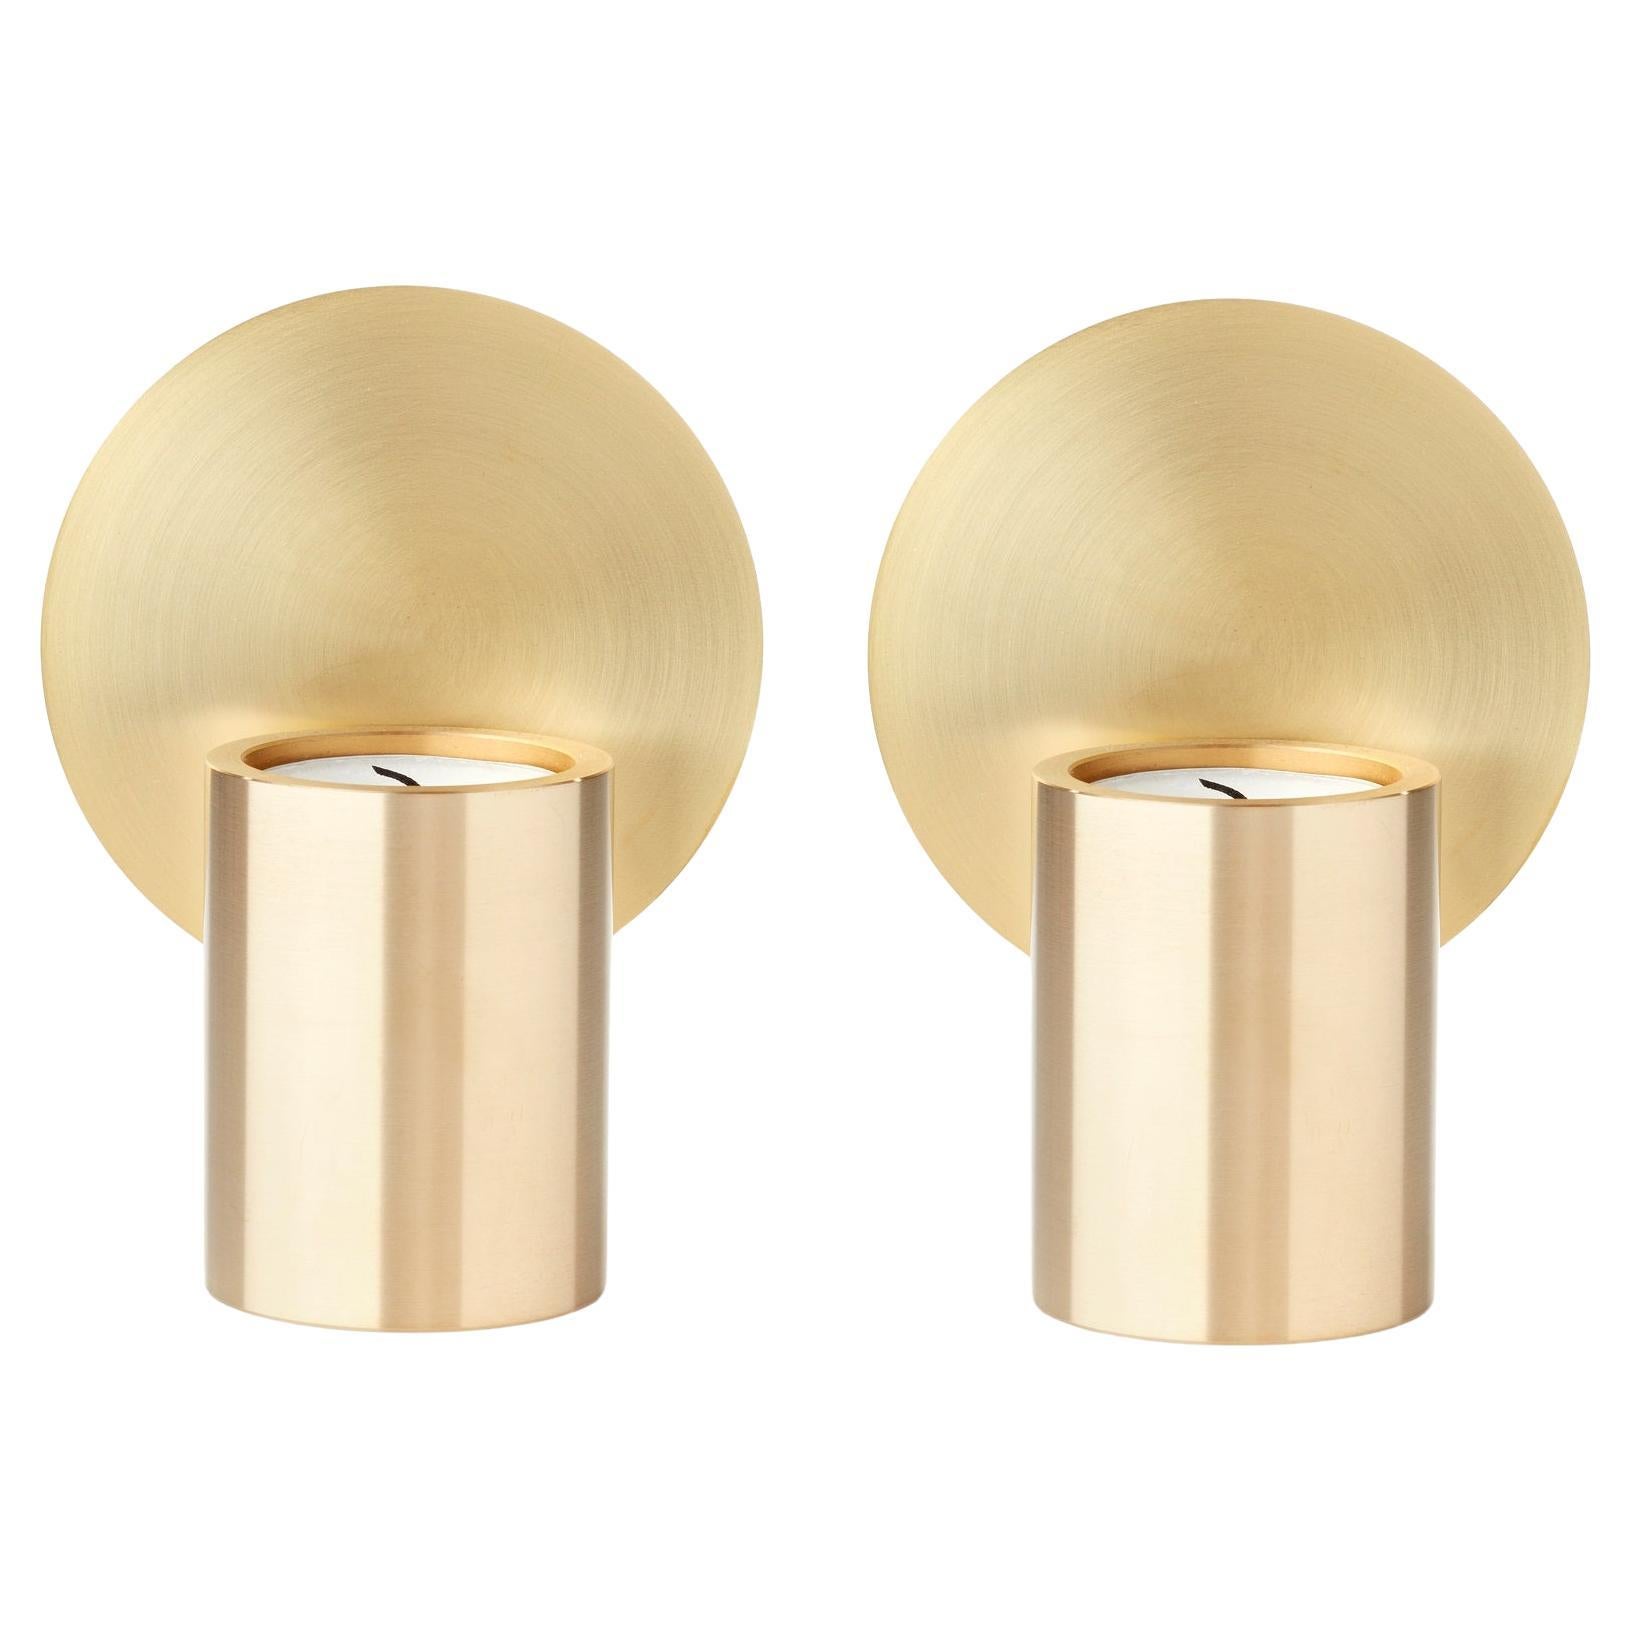 Set of 2 Glow Brass Tealight Holders by Applicata